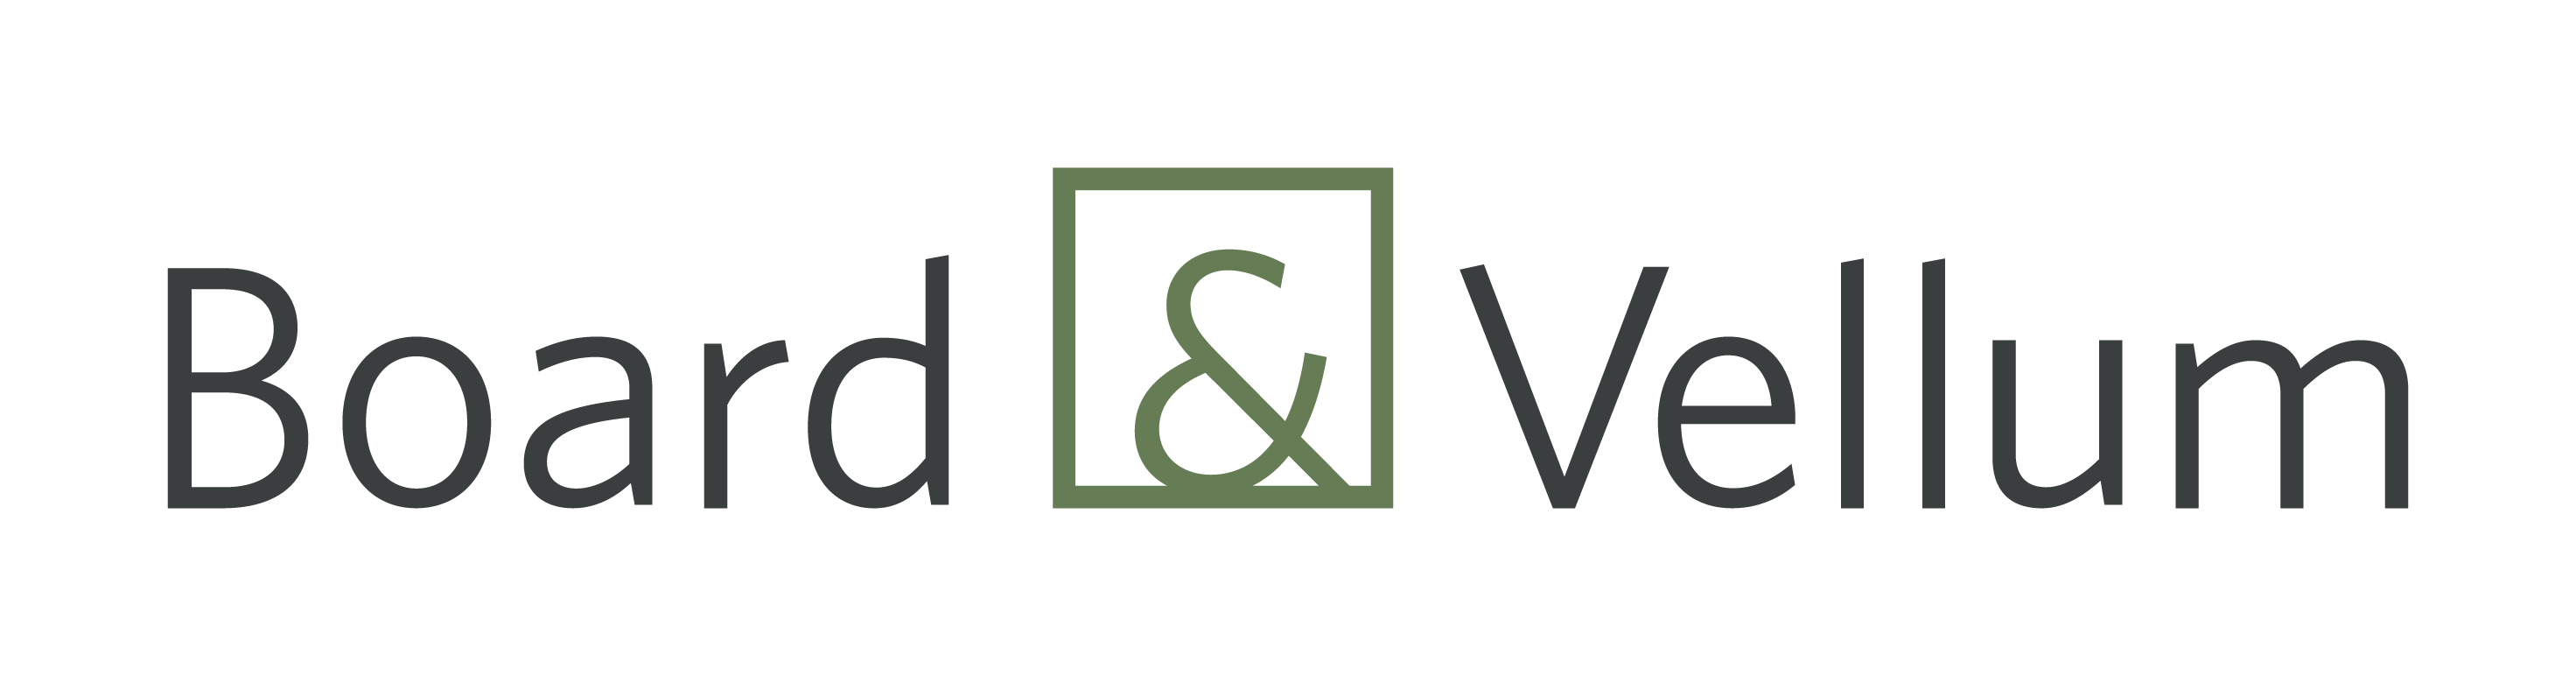 Board Vellum Logo Color Includes Clear Area